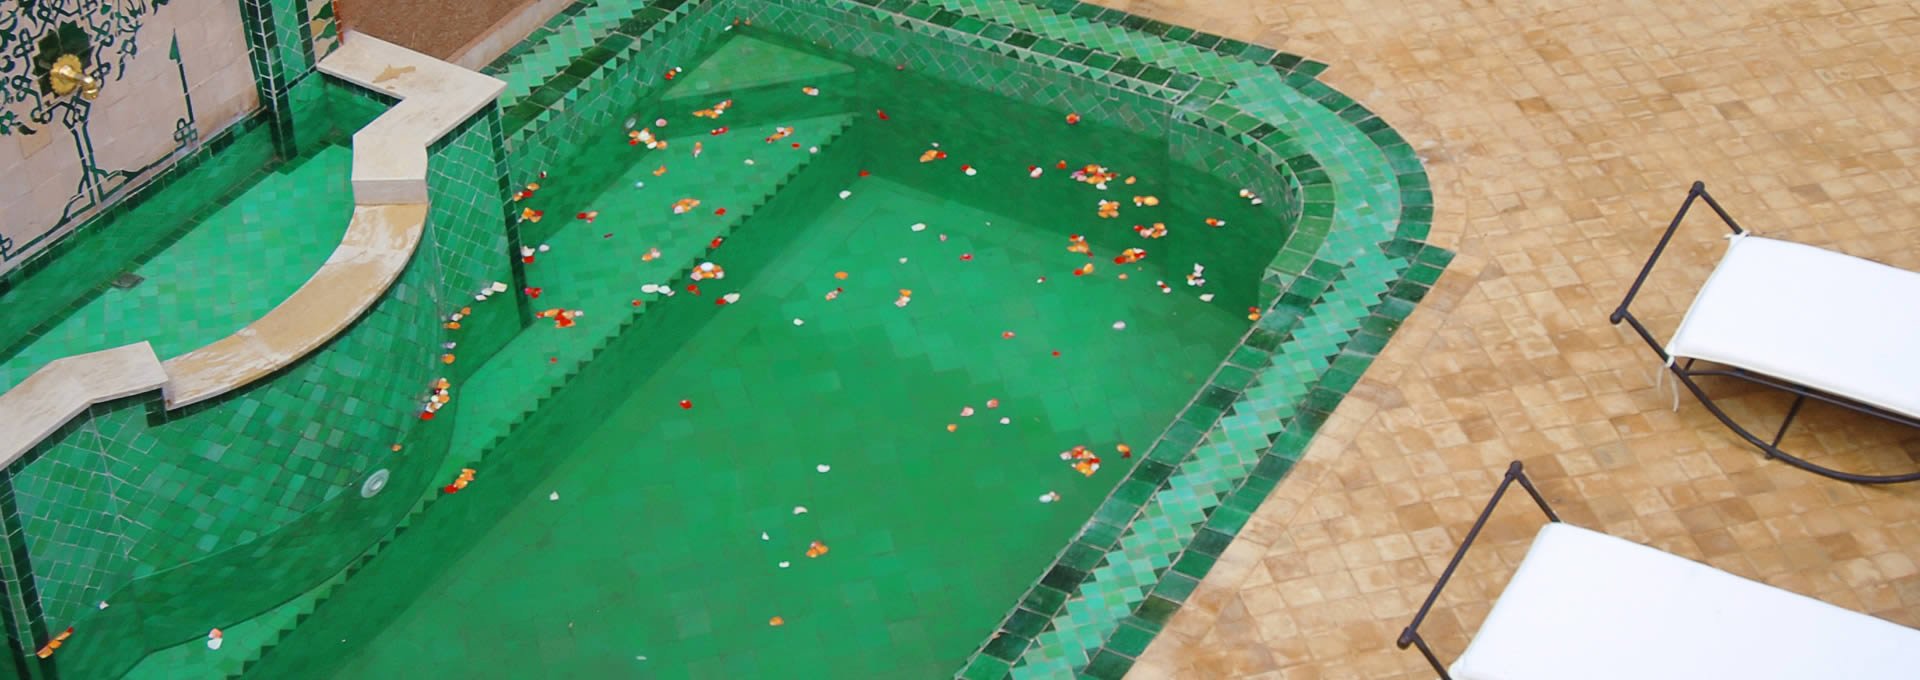 HOTEL PALMERAIE MARRAKECH DAR LAMIA, piscine